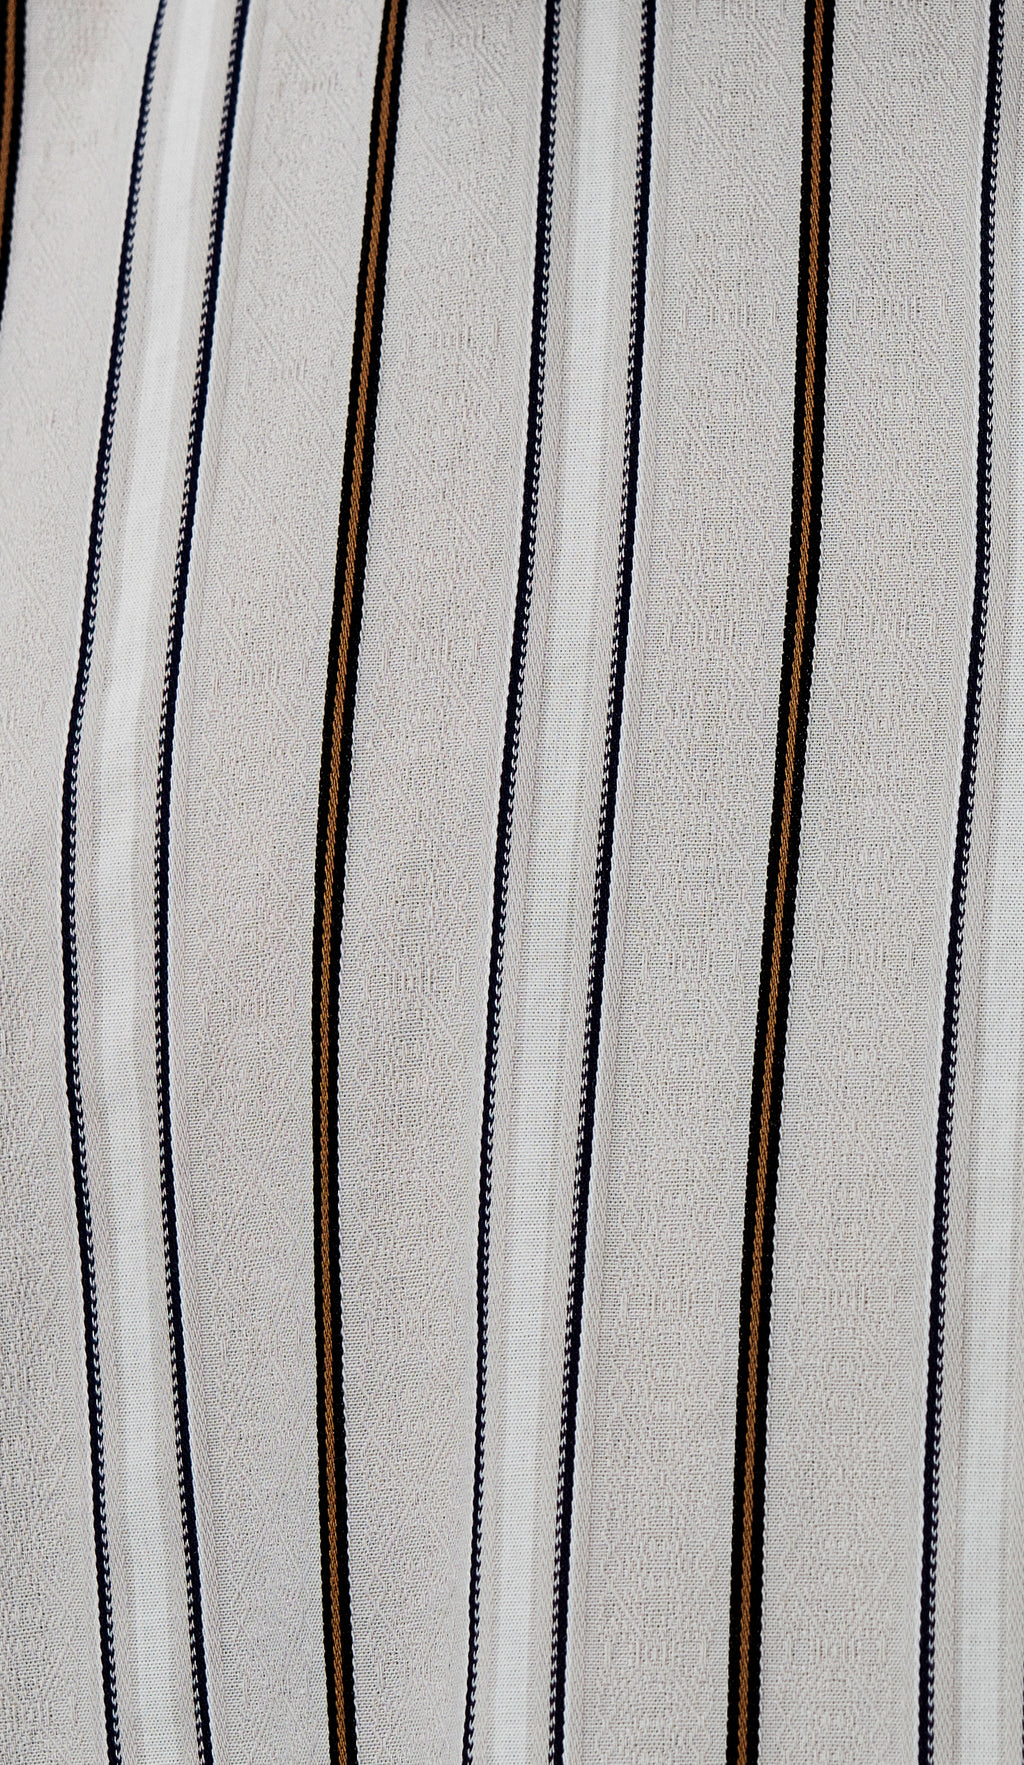 Generous Shirt - Vintage Brown Stripe